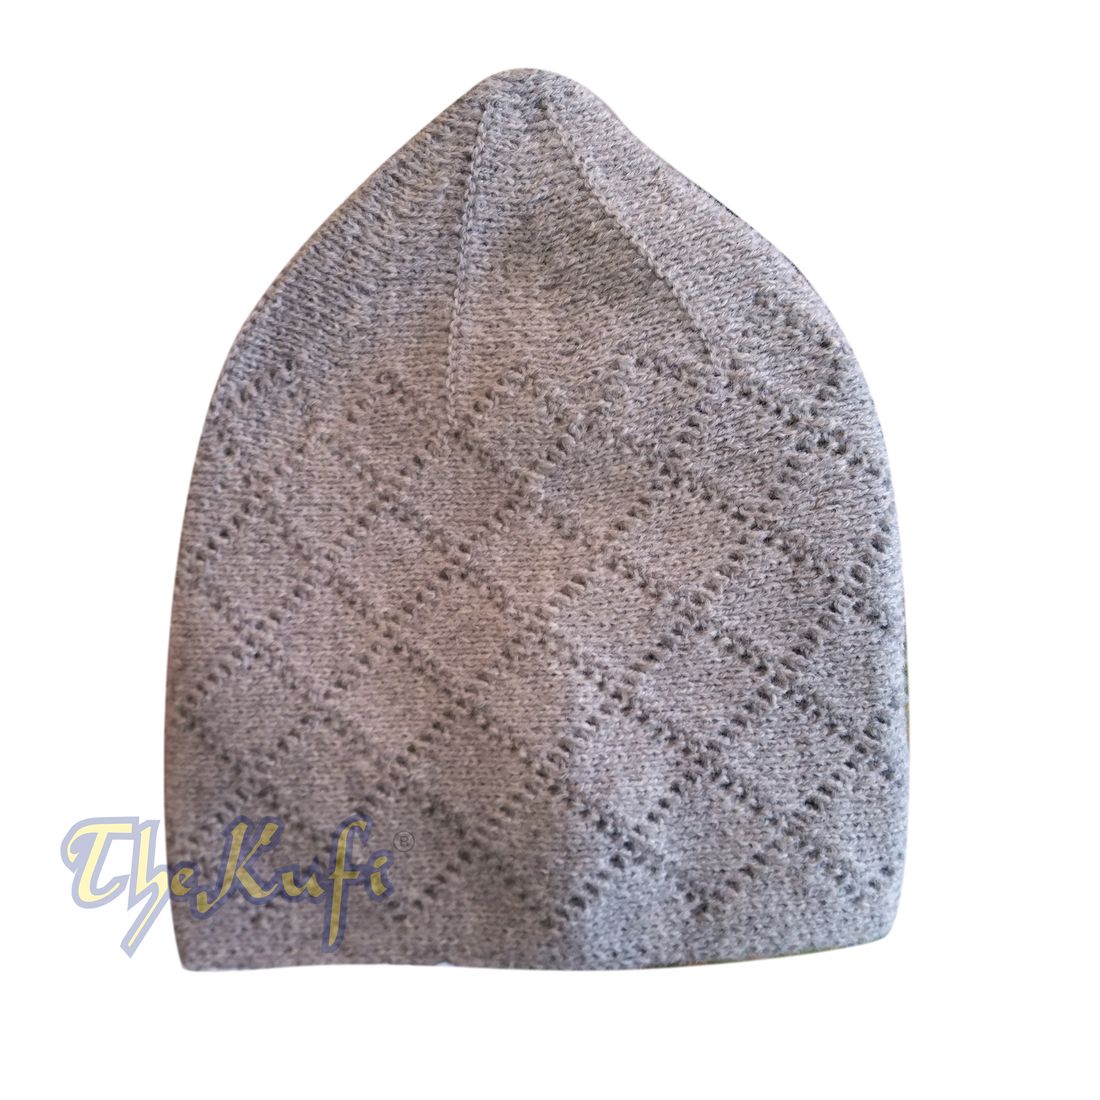 Skull Cap Kufi for Winter – Gray Acrylic 2-3mm Thick Turkish Prayer Hat